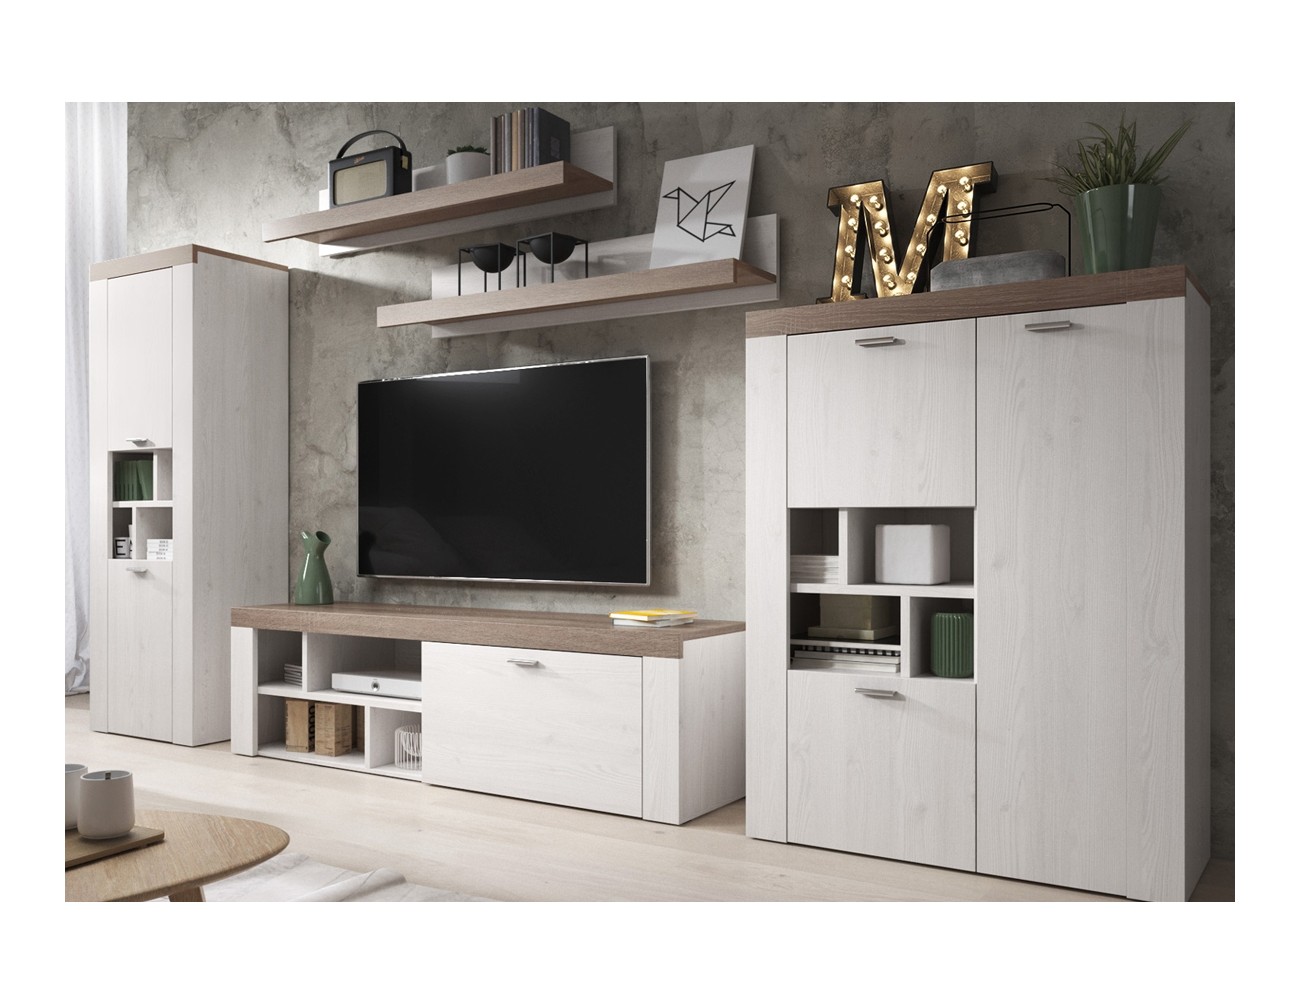 Adela System - J&B Furniture